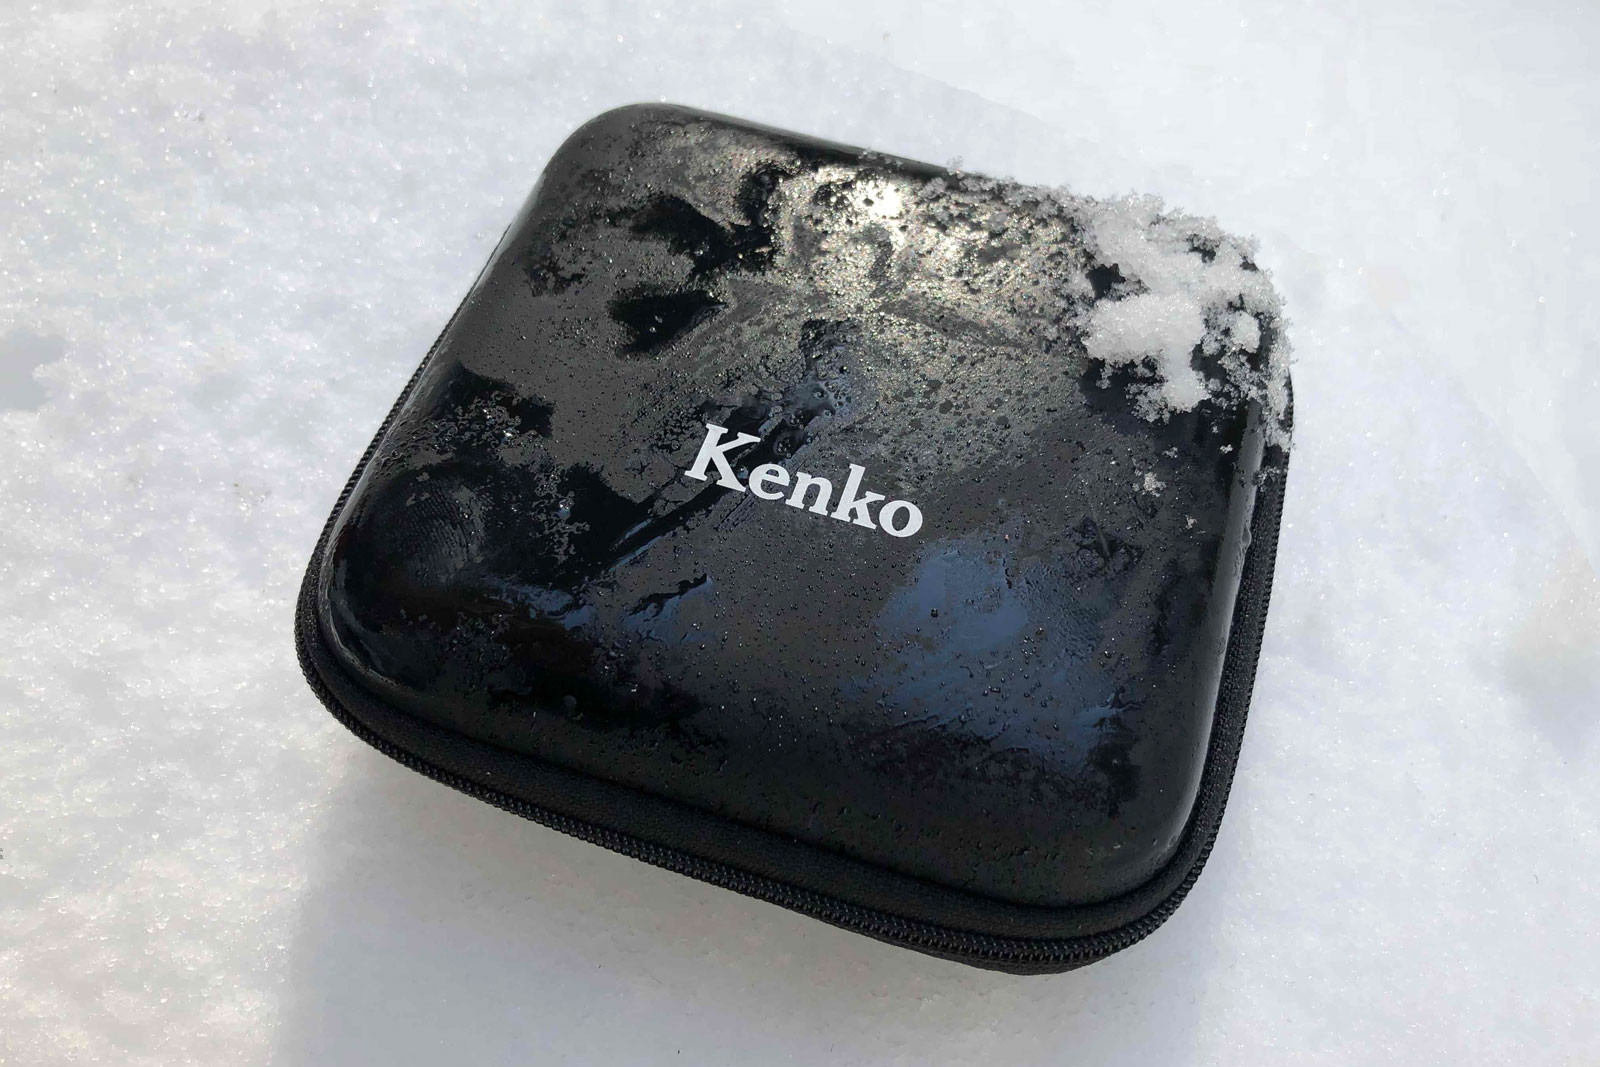 Kenko Global - Advanced Drone Filters IRND kit for DJI Phantom 4 